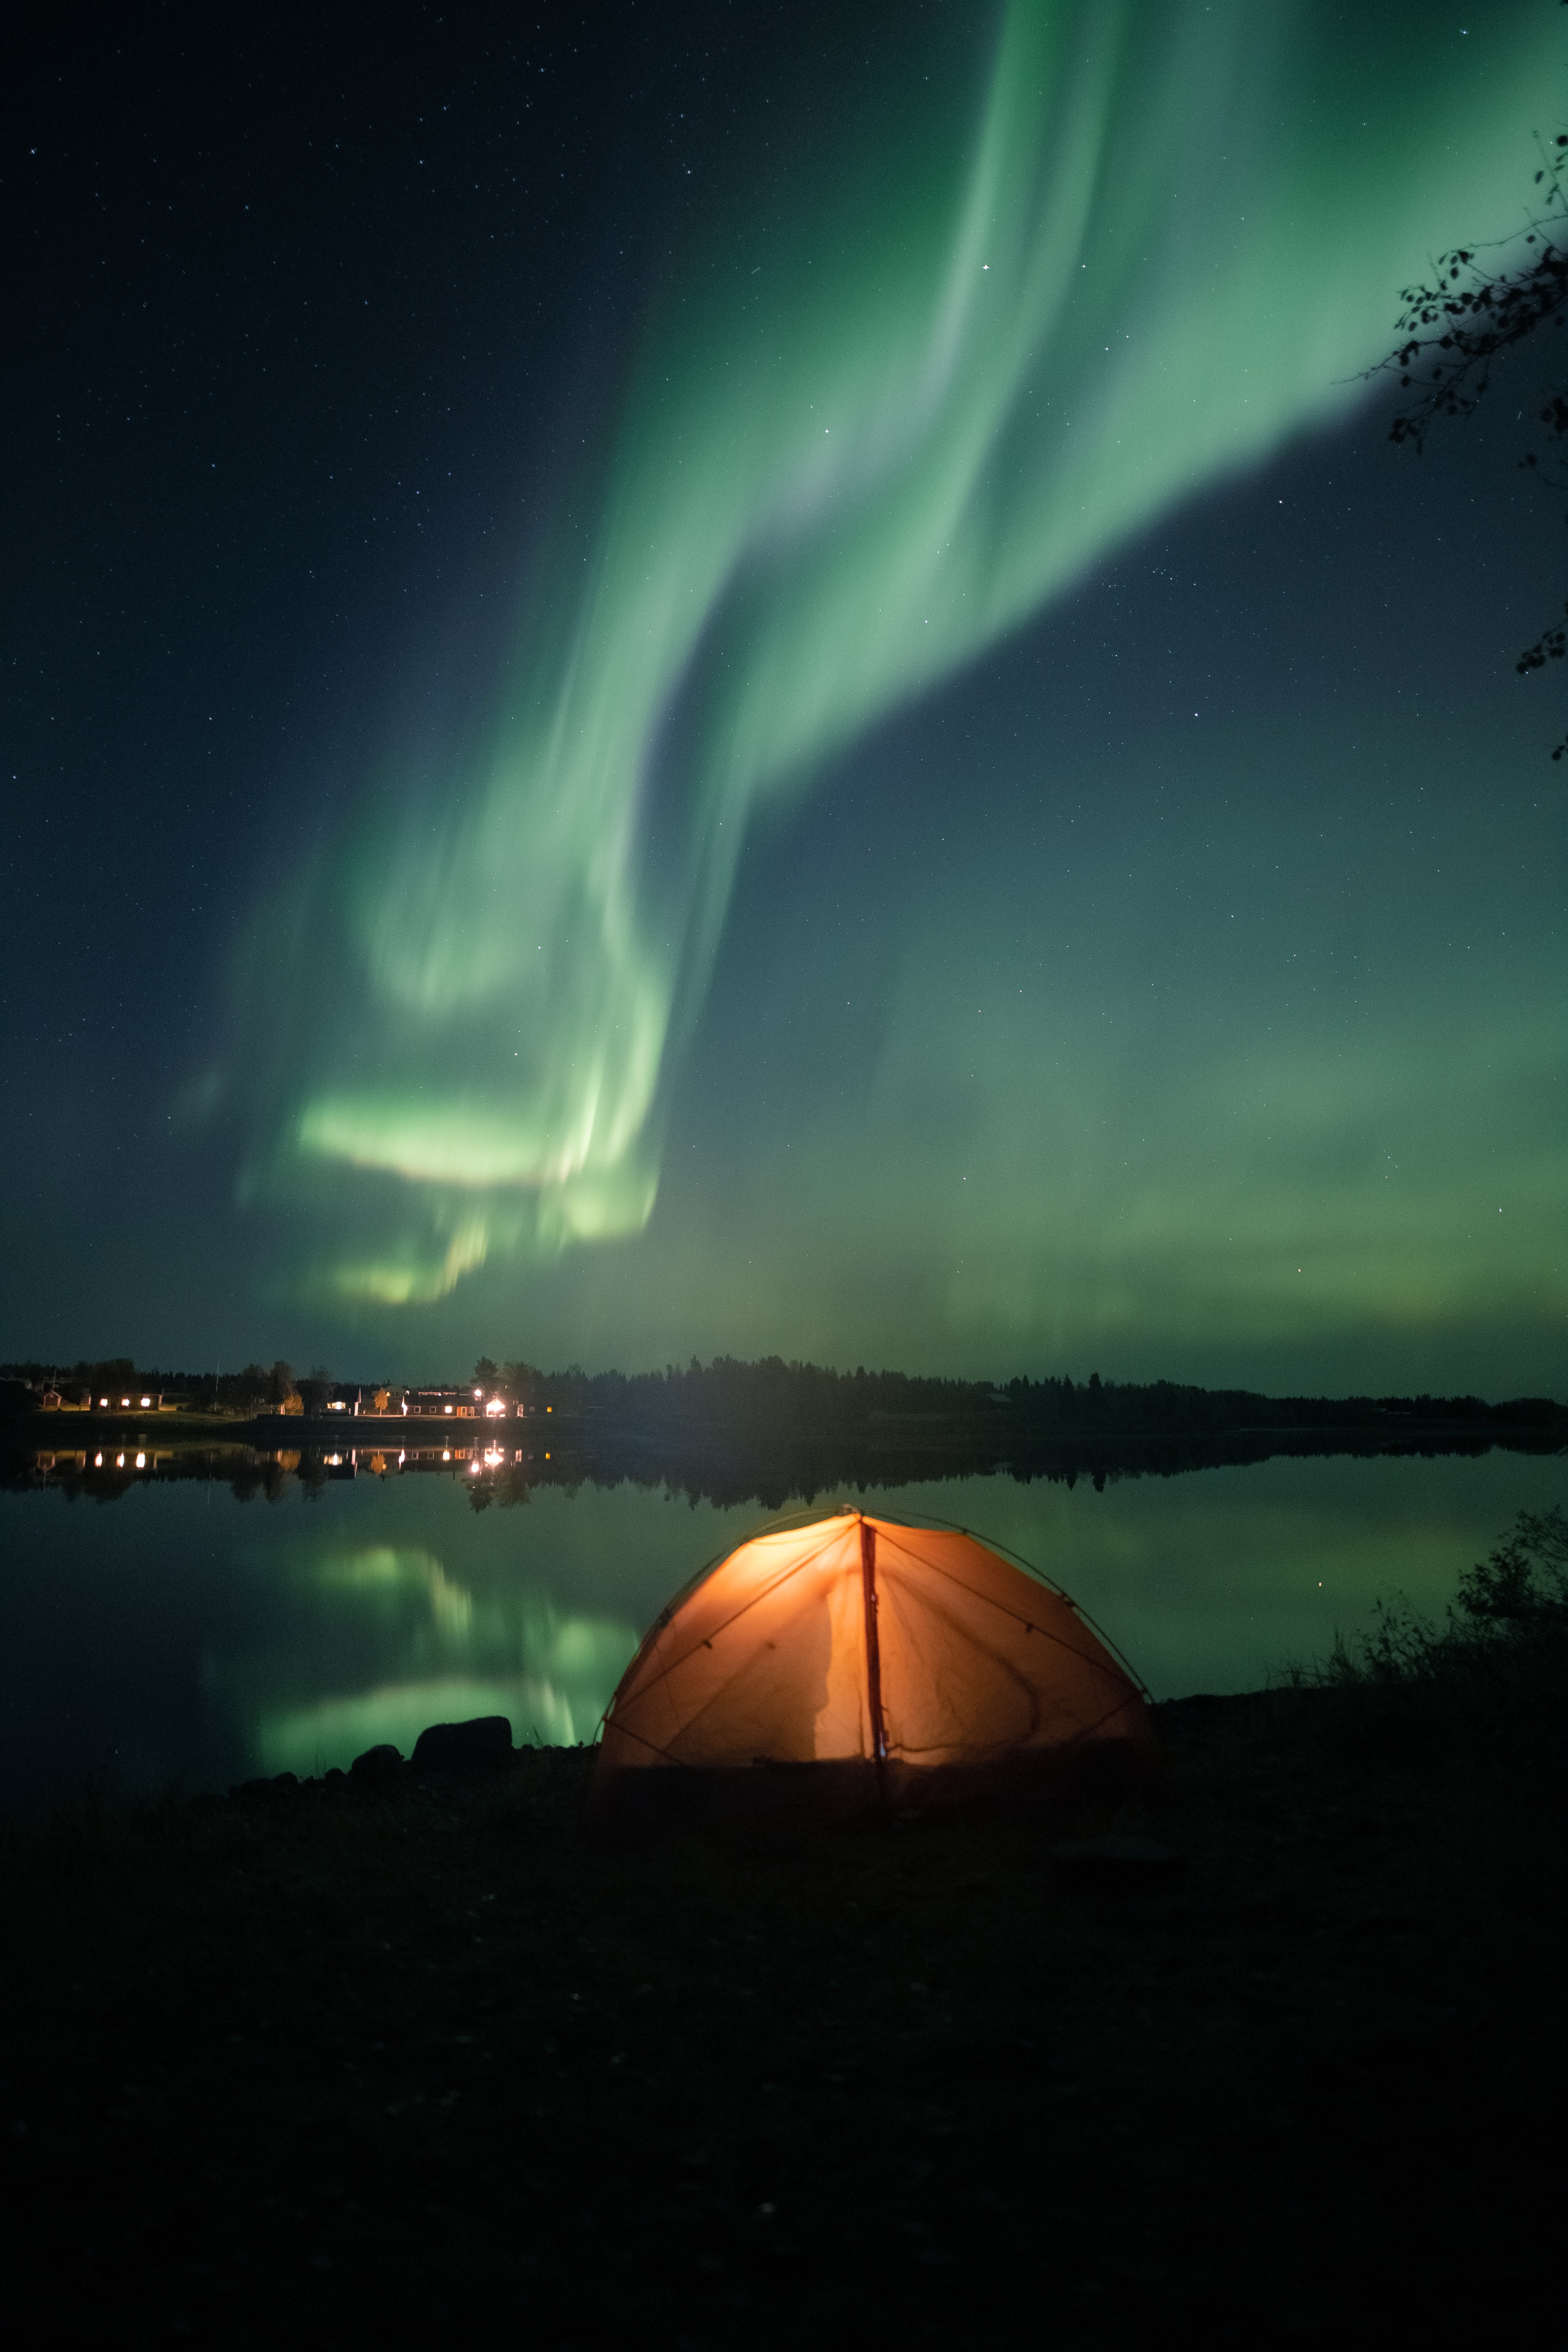 northern lights, aurora borealis, night, lake, dark, tent, camping, campsite